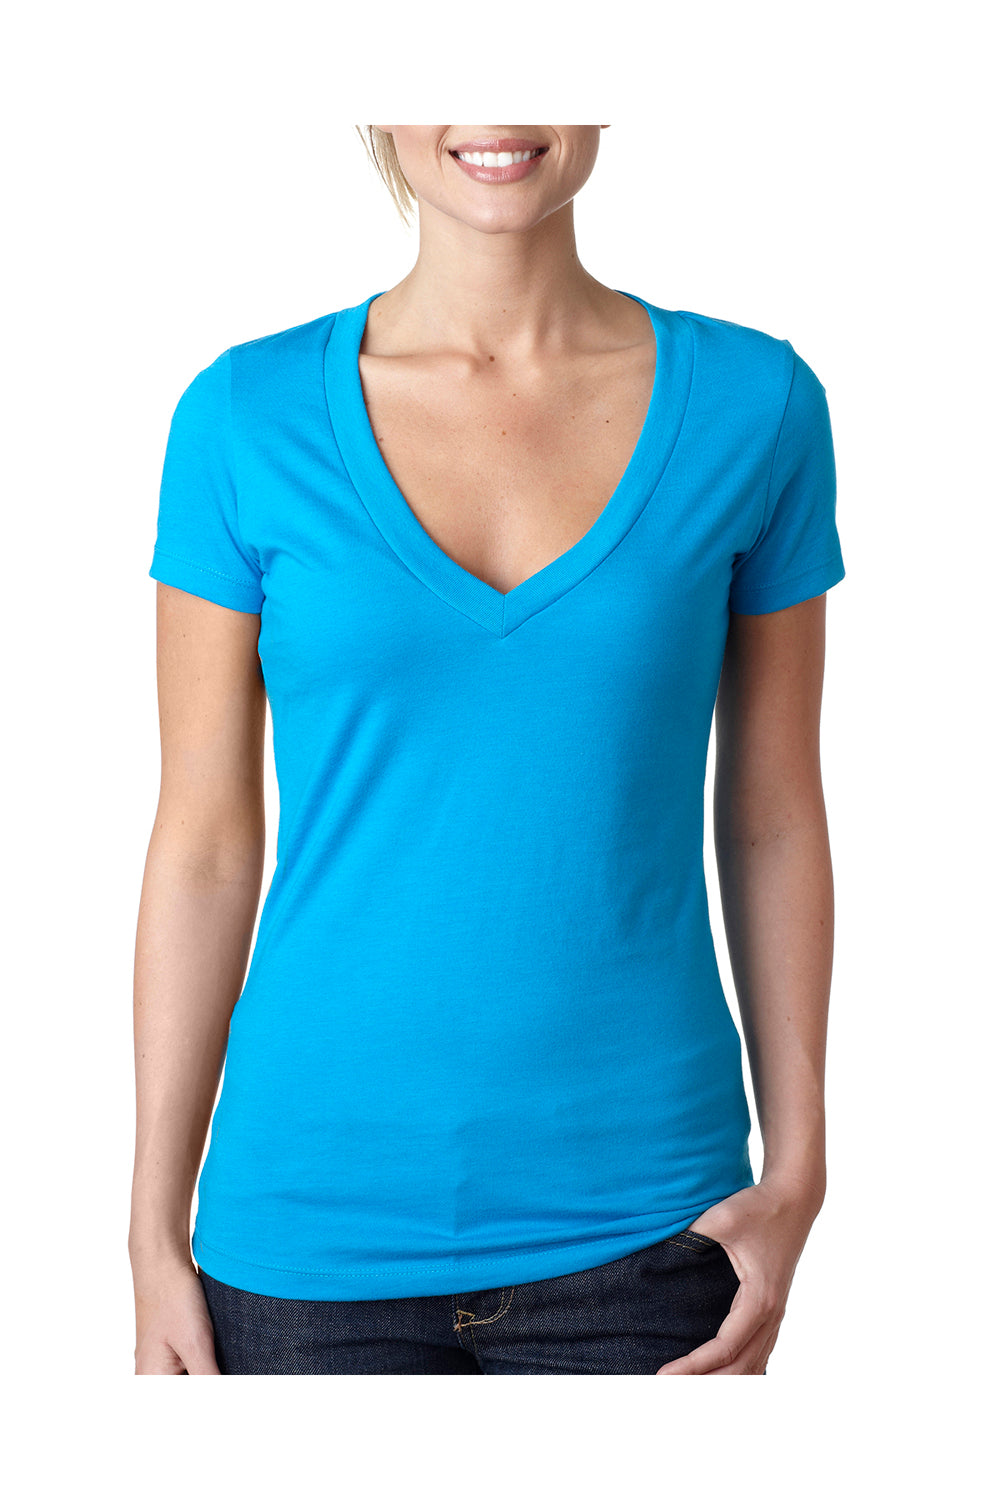 Next Level 6640 Womens CVC Jersey Short Sleeve V-Neck T-Shirt Turquoise Blue Front